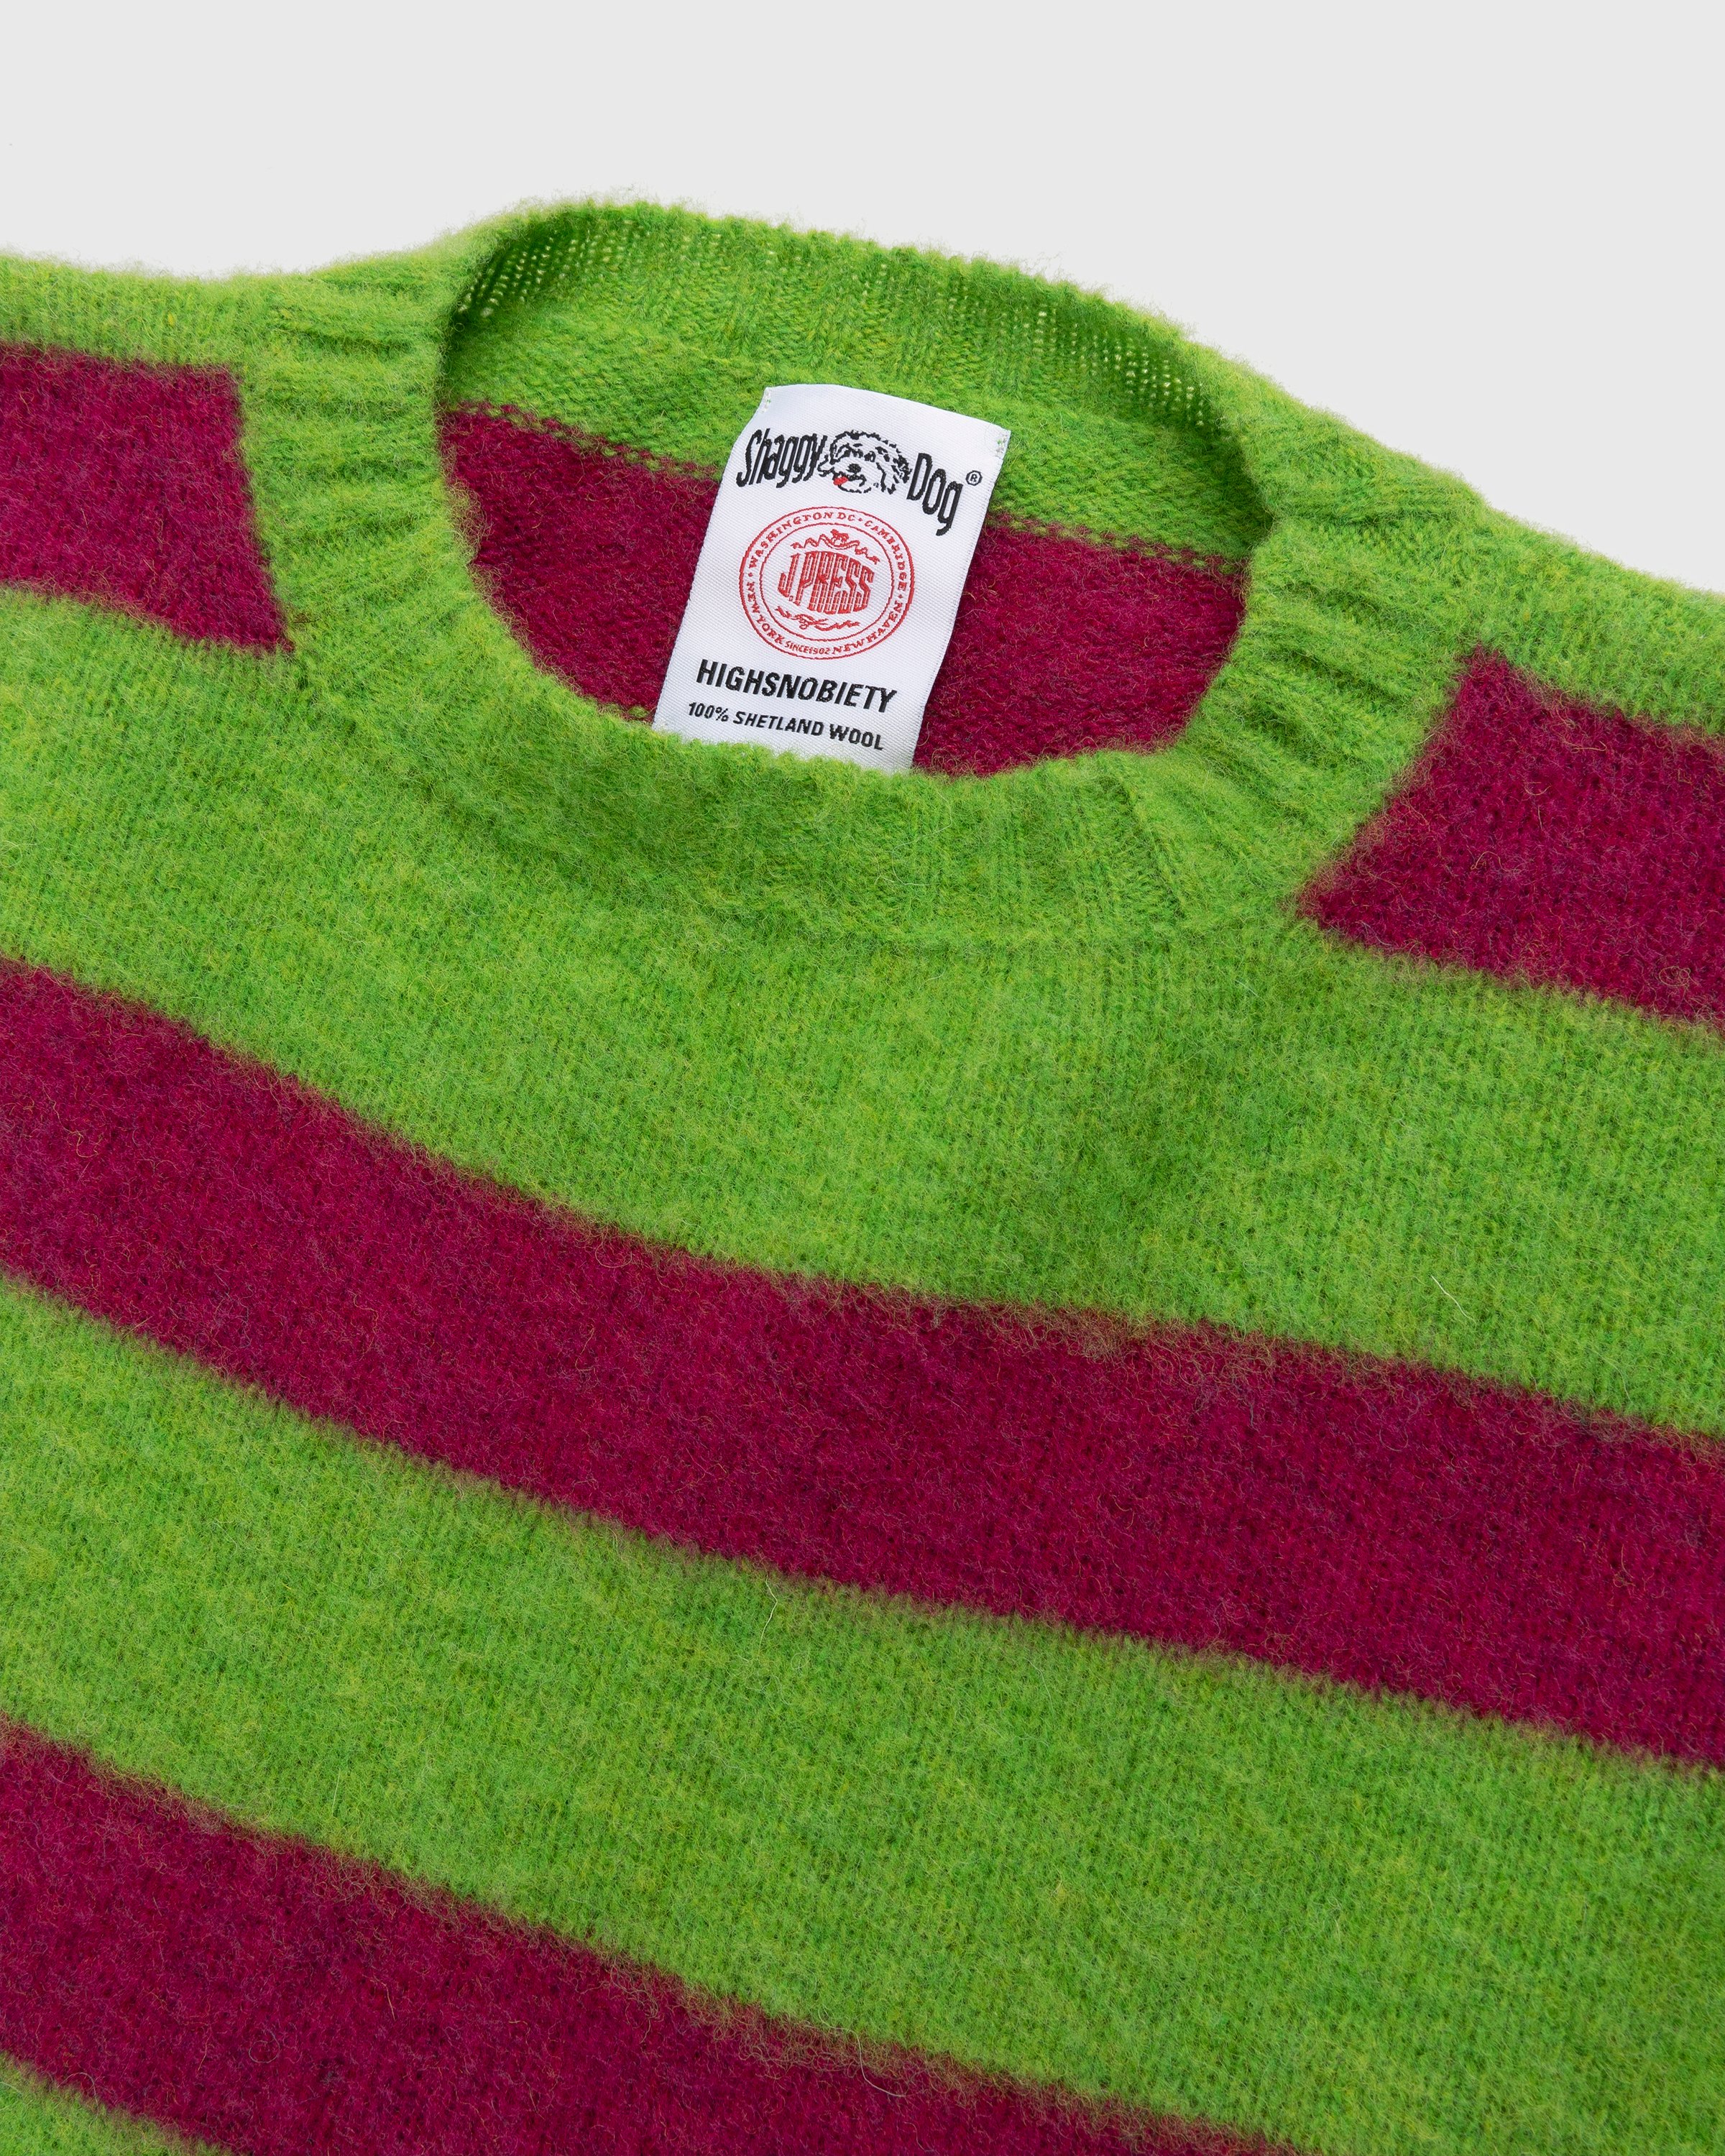 J. Press x Highsnobiety - Shaggy Dog Stripe Sweater Multi - Clothing - Multi - Image 3